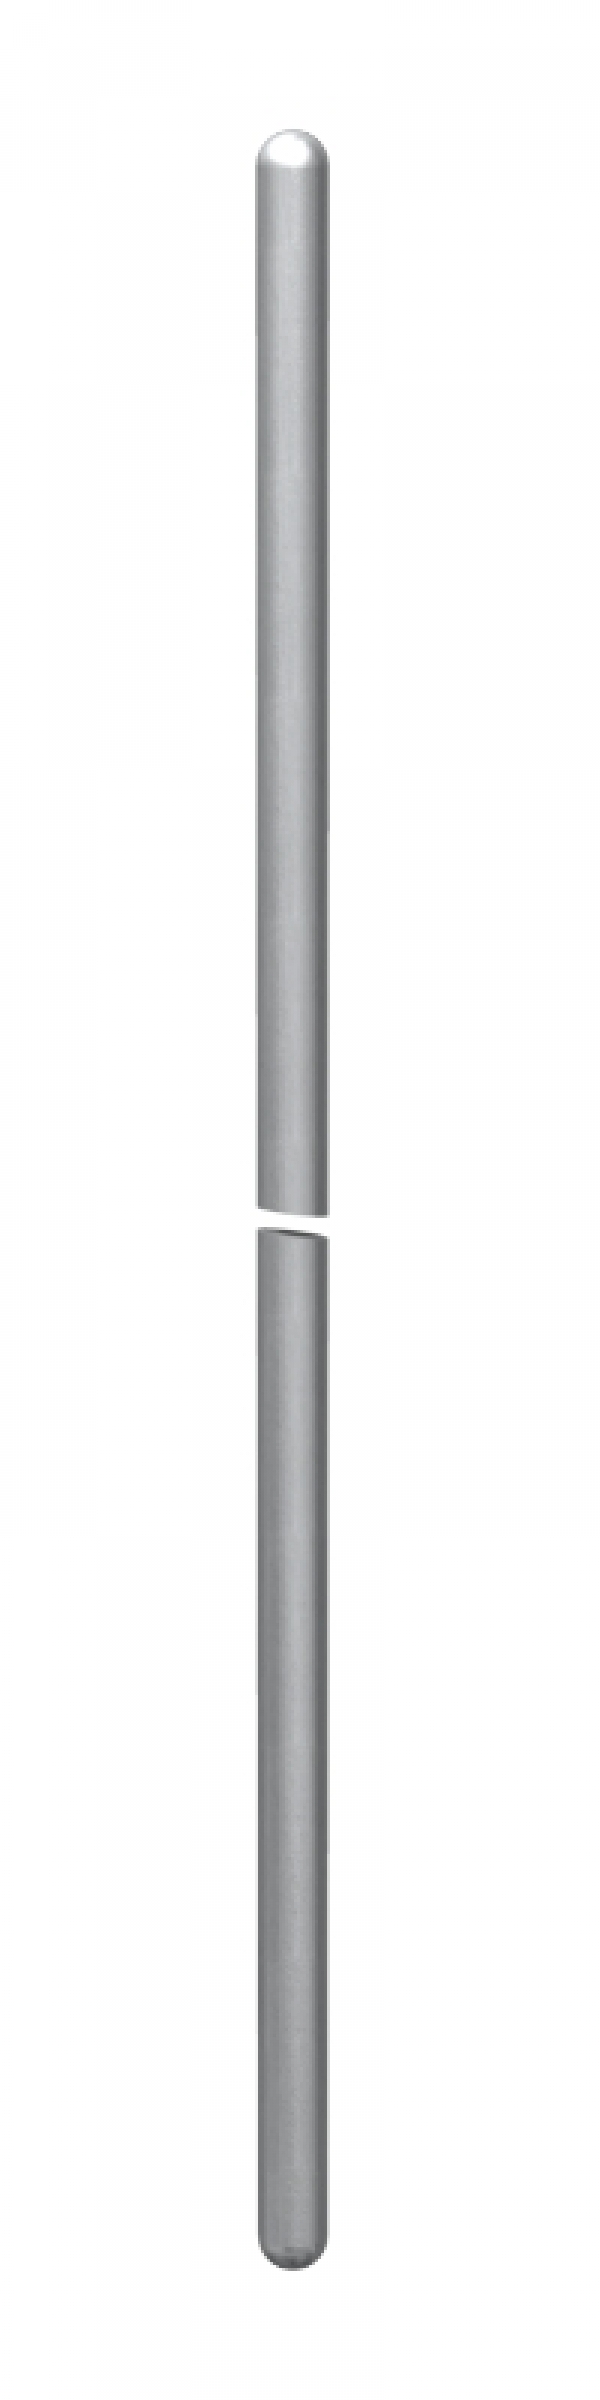 5400155 - OBO BETTERMANN Молниеприемный стержень  1,5 м (101 A-1500).